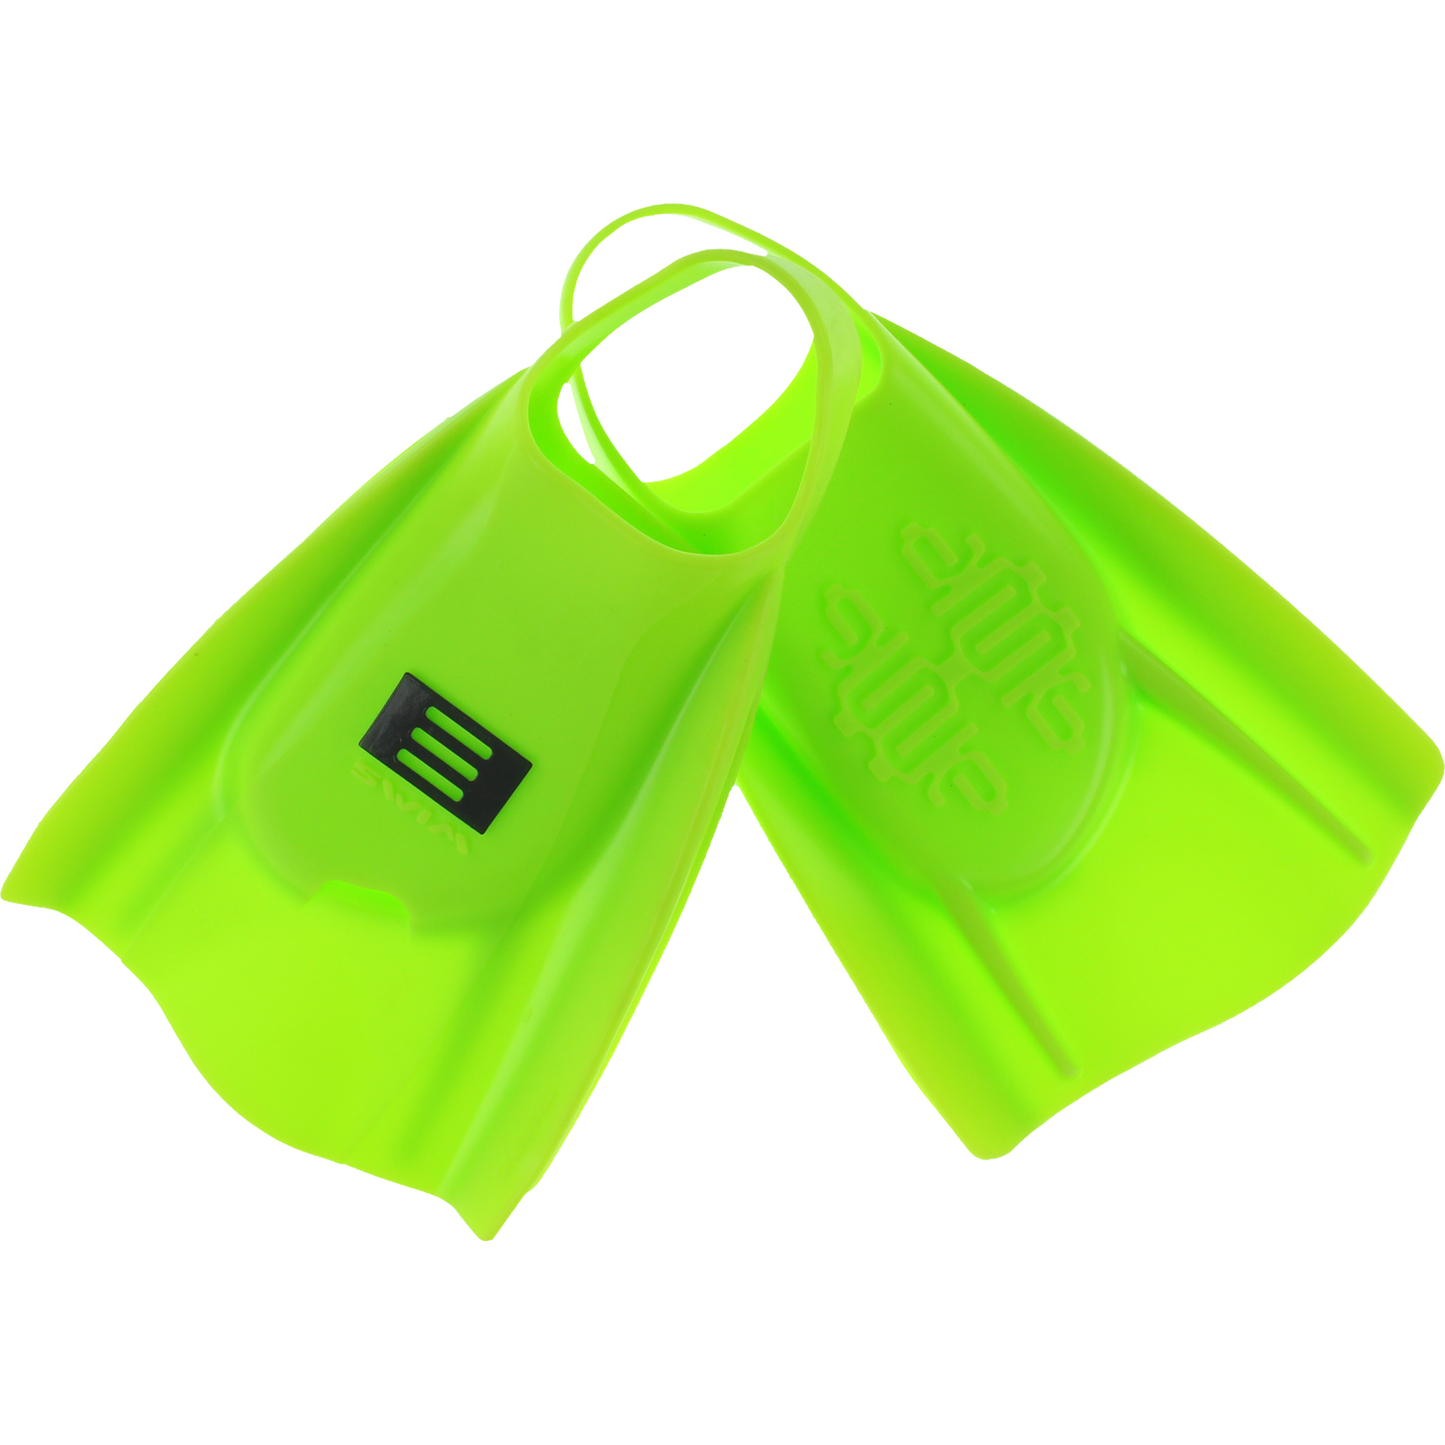 DMC Elite Swim Fins - MEDIUM Neon Green (Size 6-7)